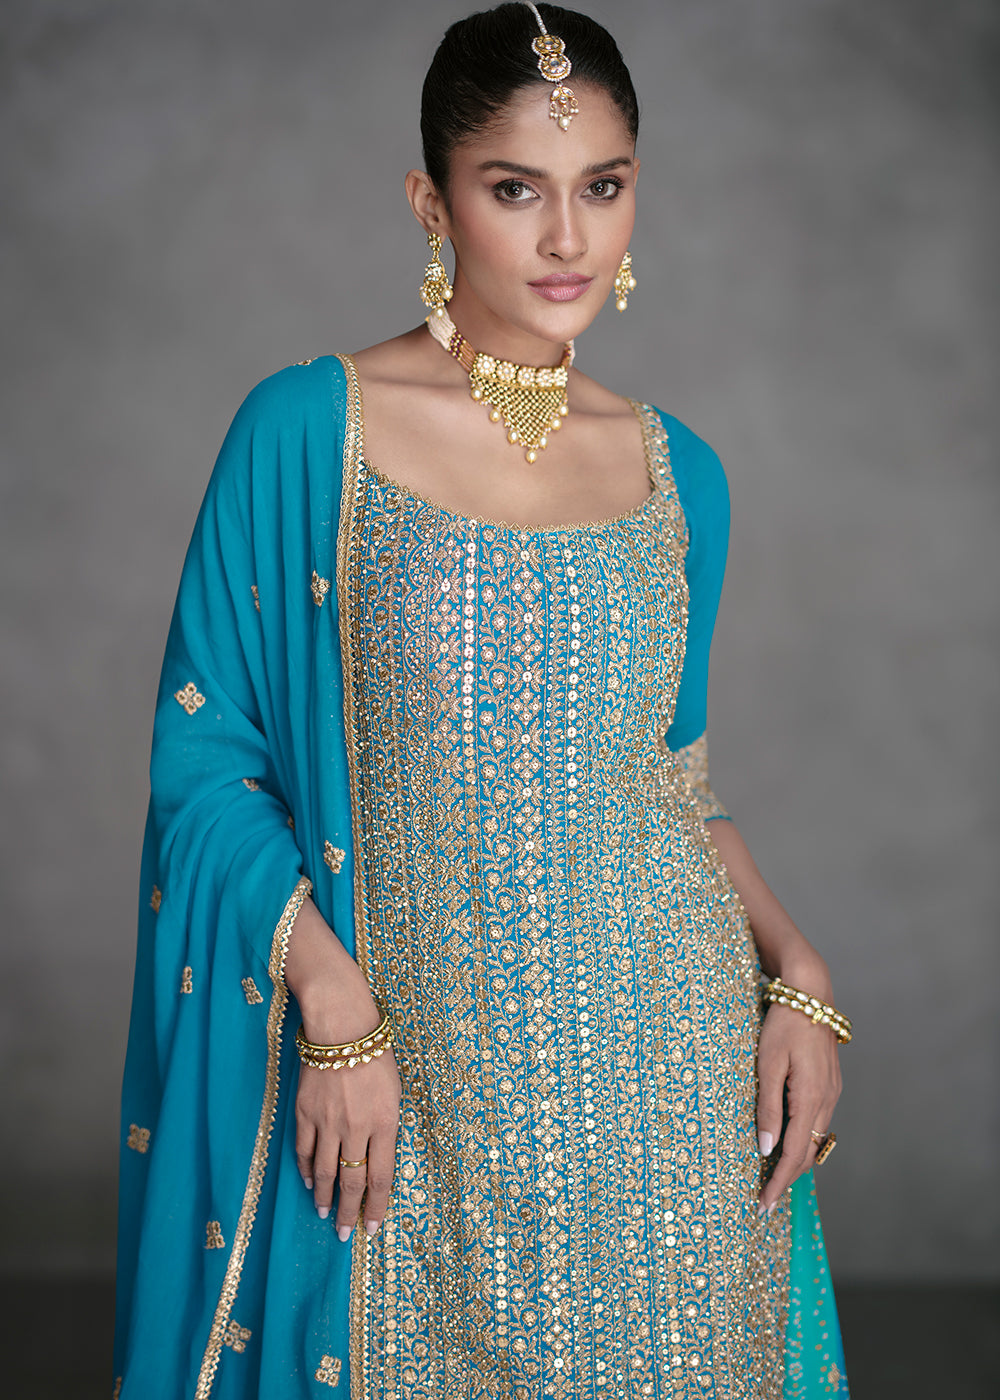 Shop Now Azure Blue Designer Style Wedding Wear Sharara Suit Online at Empress Clothing in USA, UK, Canada, Italy & Worldwide.